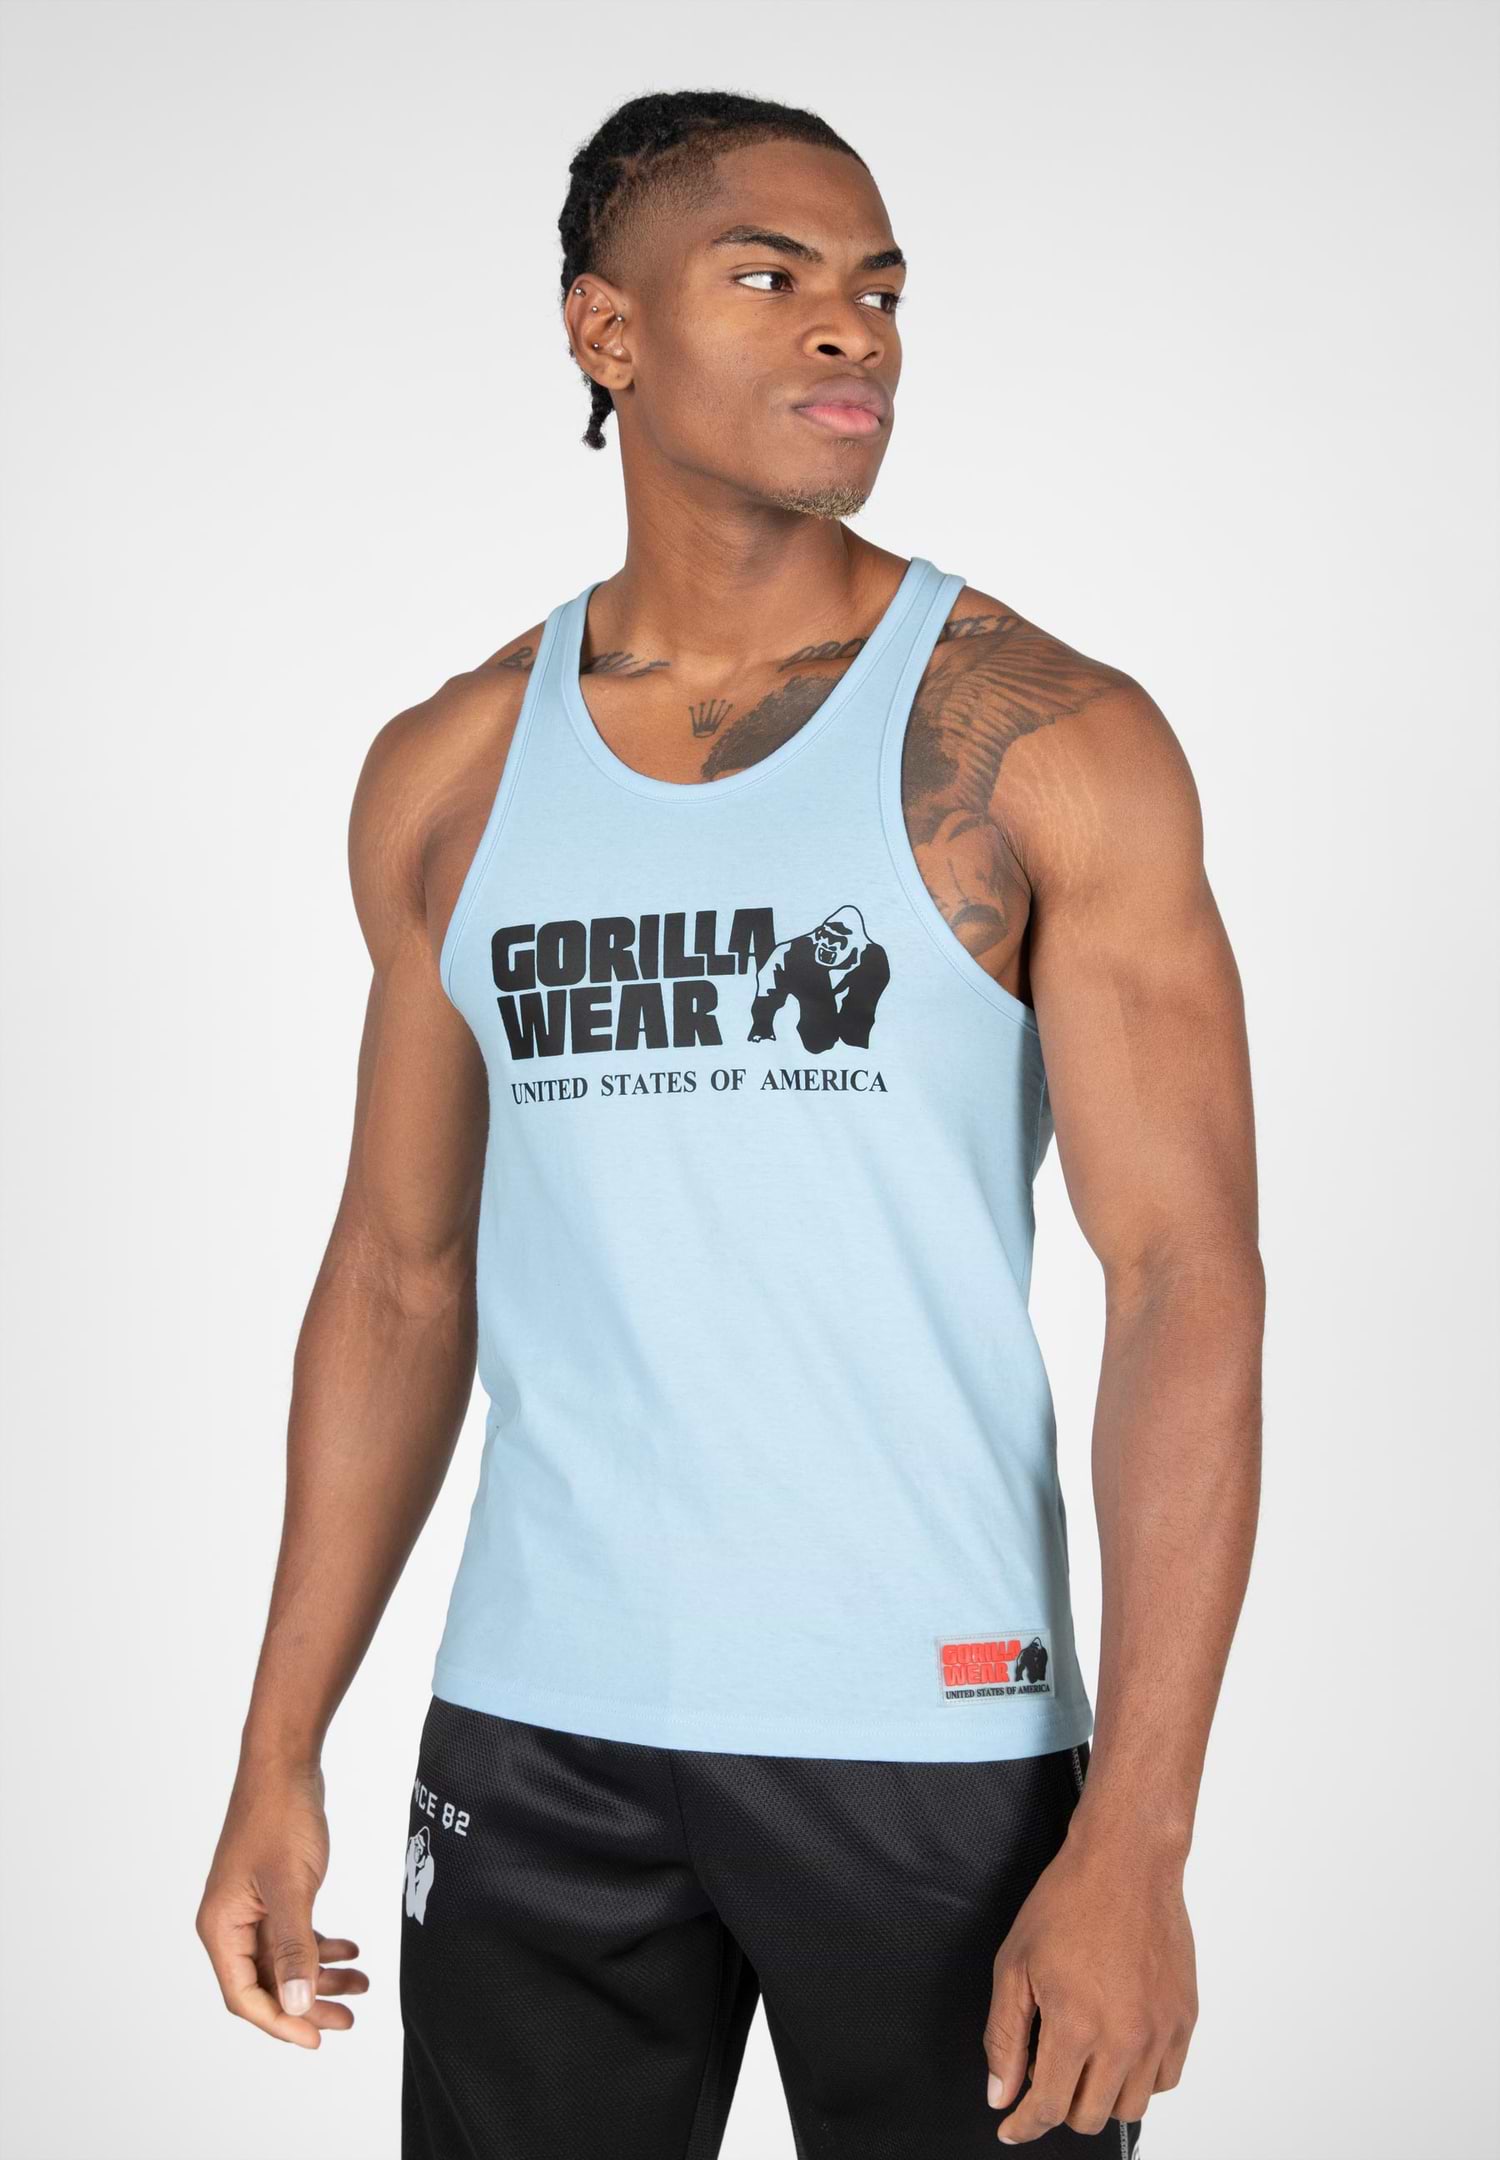 Gorilla Gym Vest Gym Clothing Bodybuilding Training Workout UFC